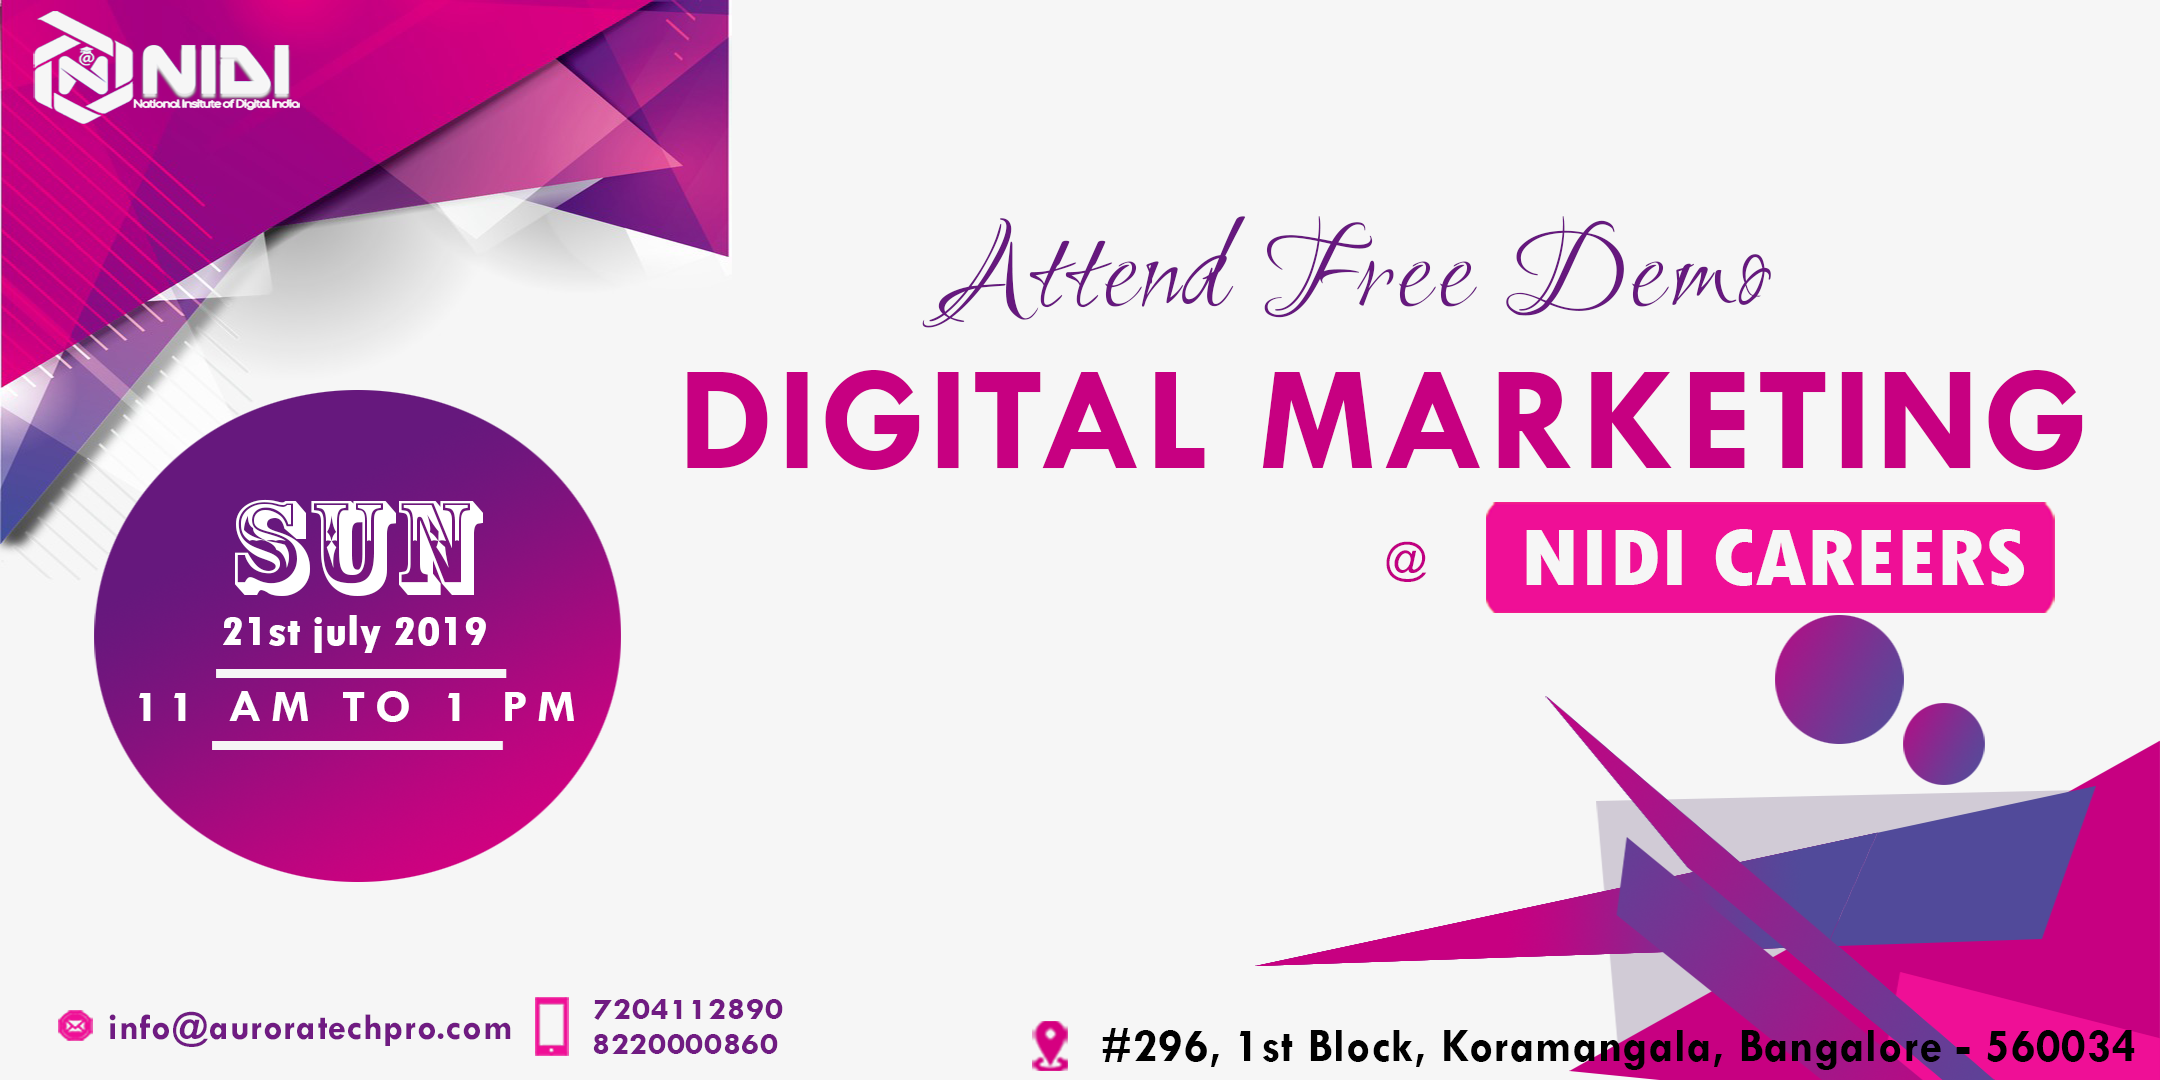 Free Demo on Advanced Digital Marketing, Bangalore, Karnataka, India